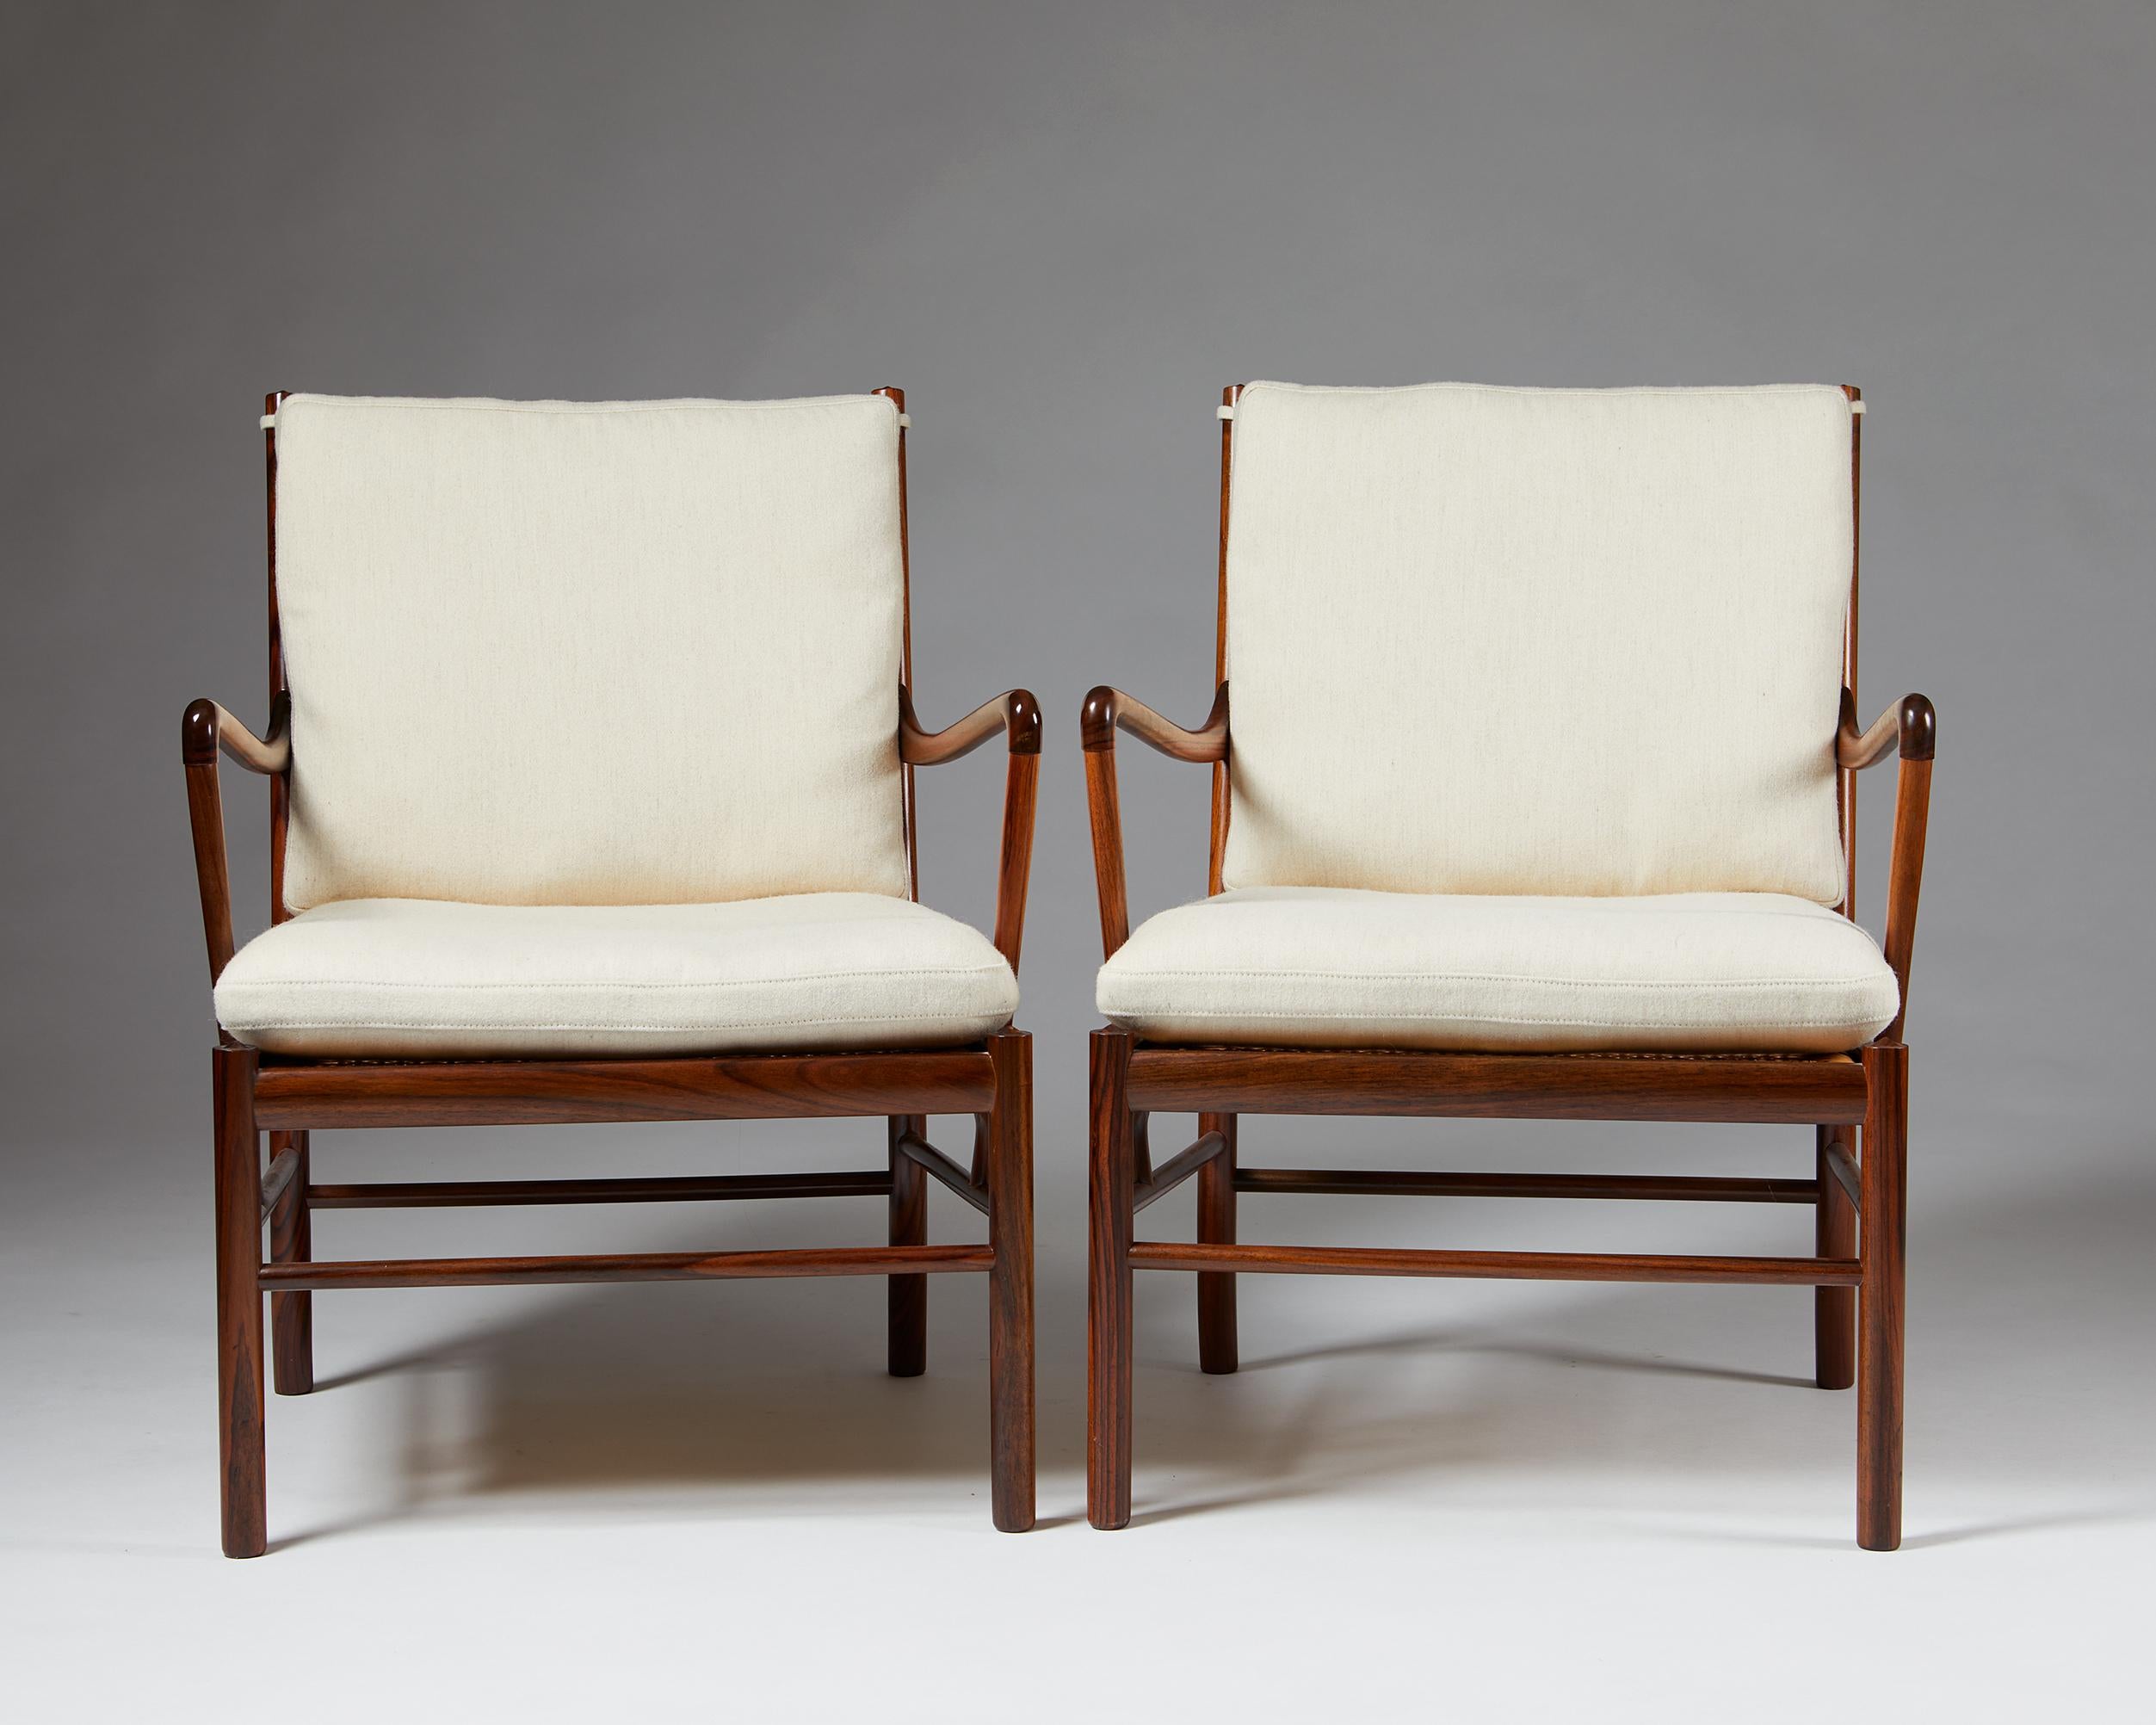 Scandinavian Modern Pair of Armchairs, PJ 149, “Colonial”, Designed by Ole Wanscher for P. Jeppesen